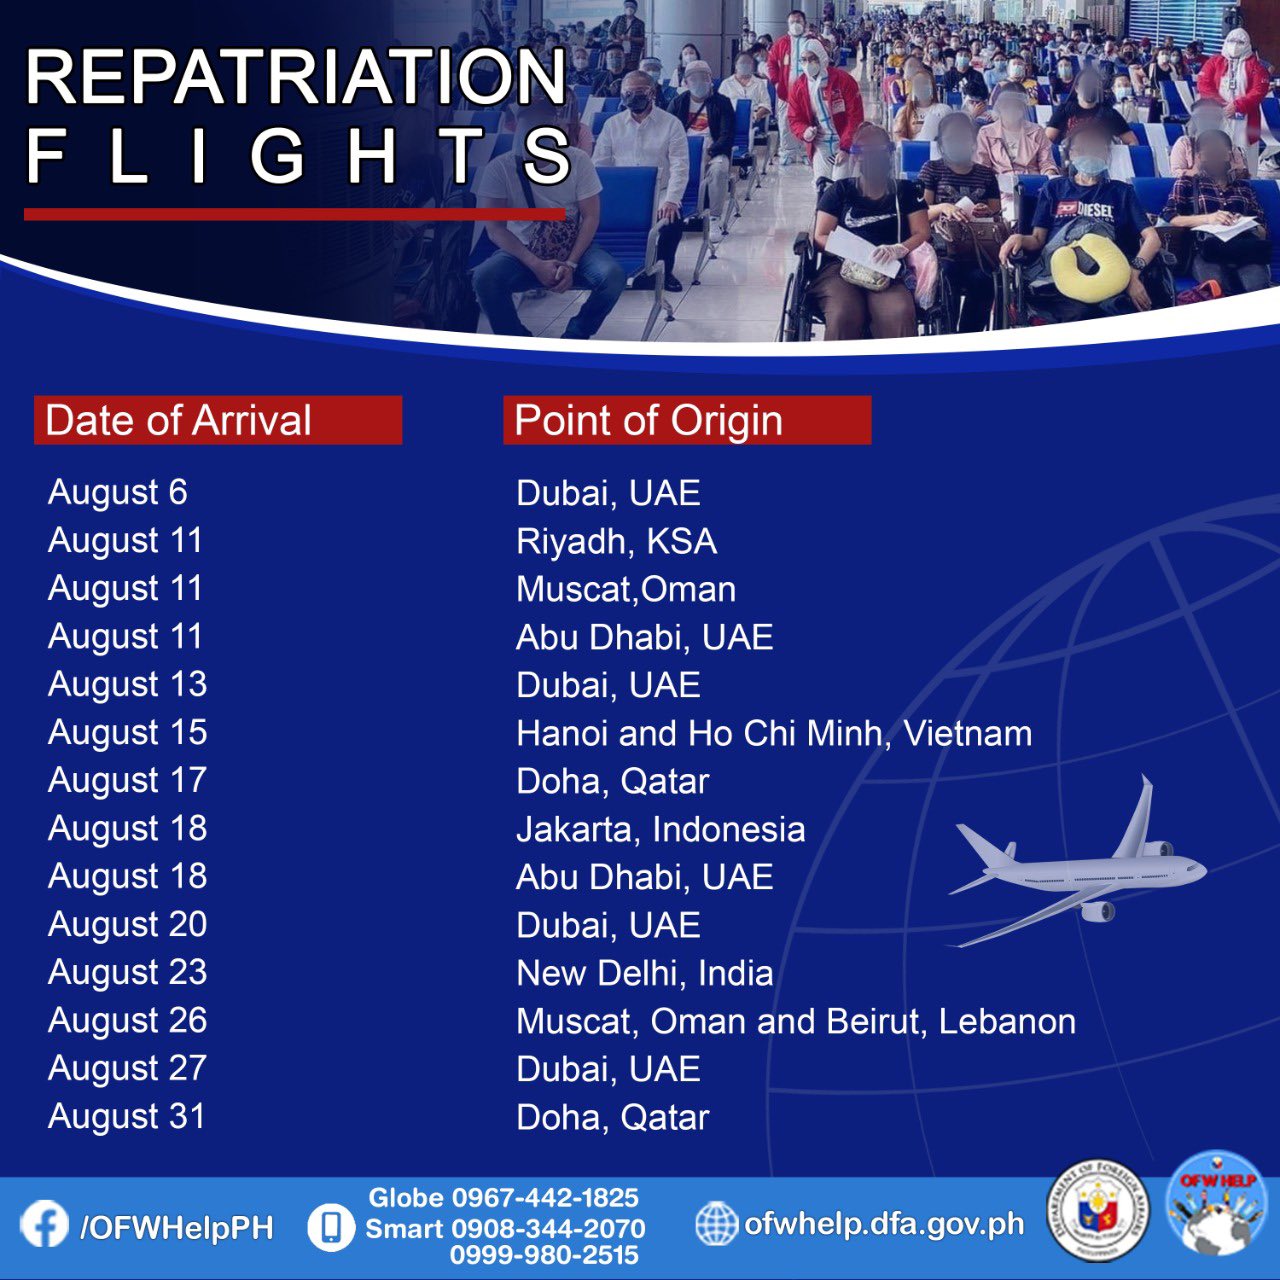 Schedule of DFA repatriation flights for August 2021